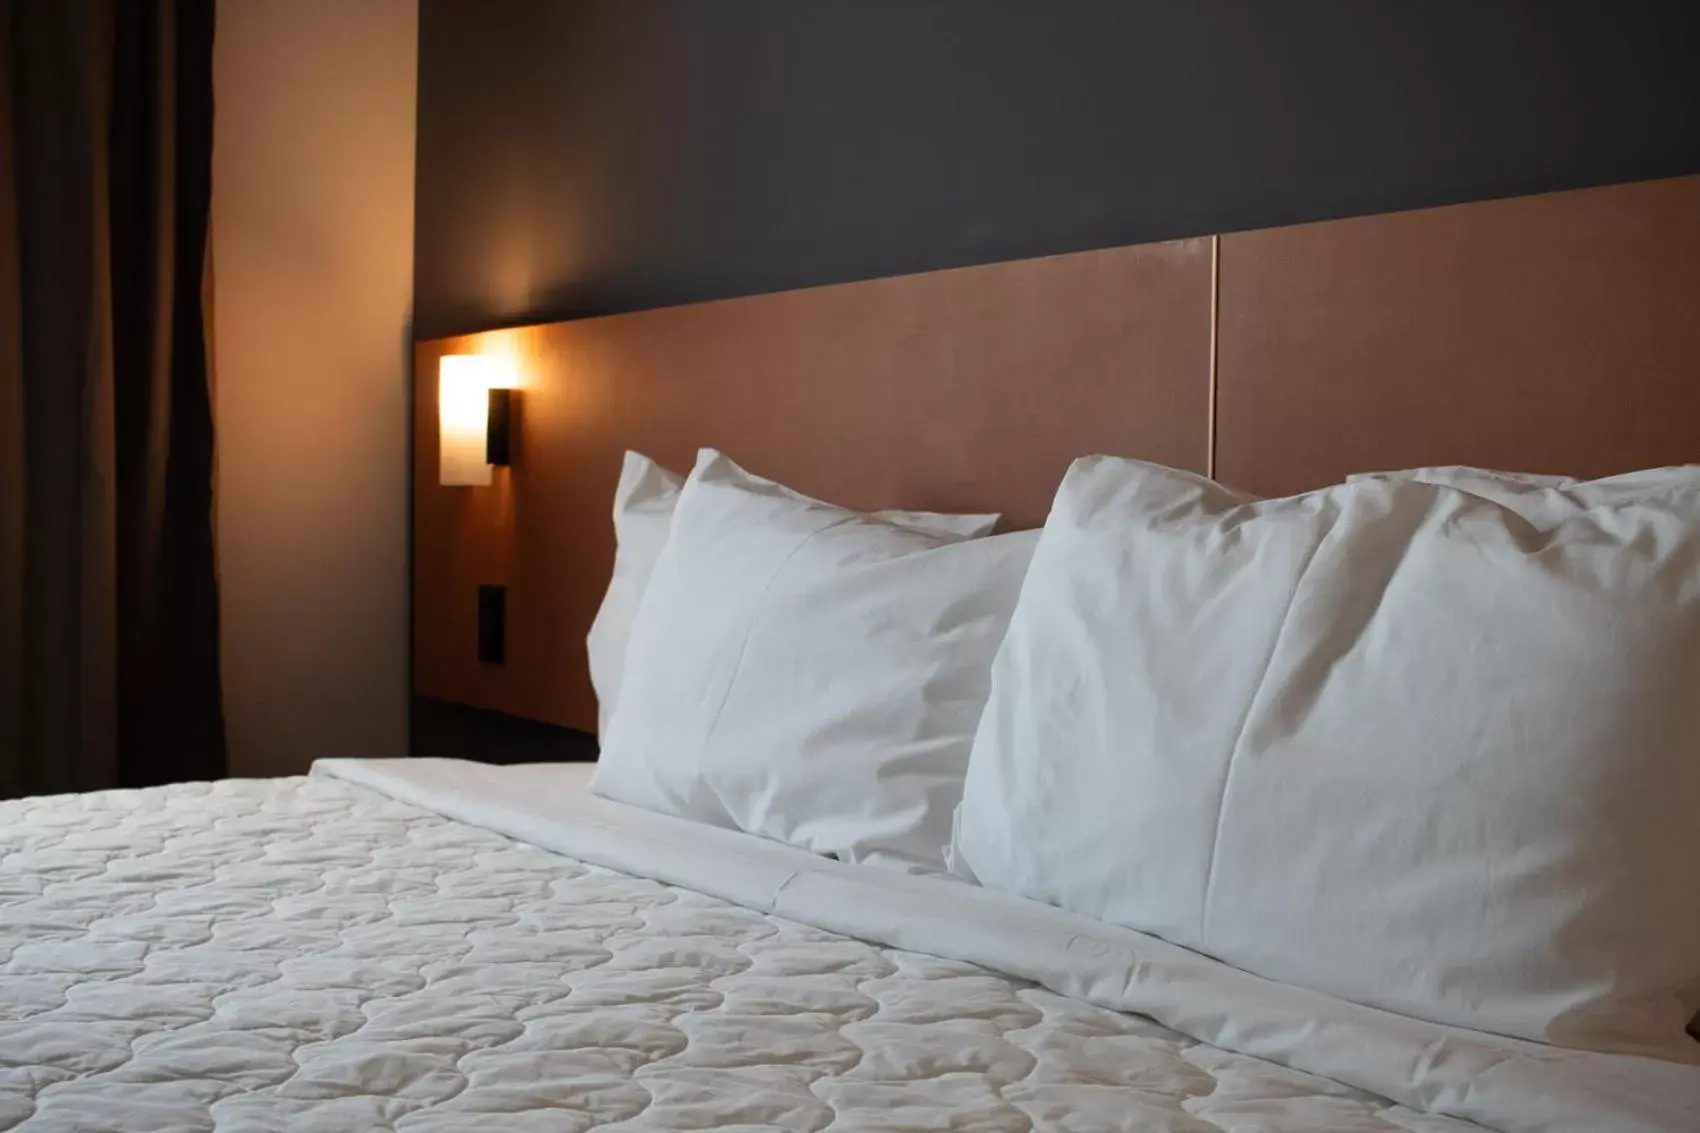 Bed in Comfort Hotel Presidente Prudente